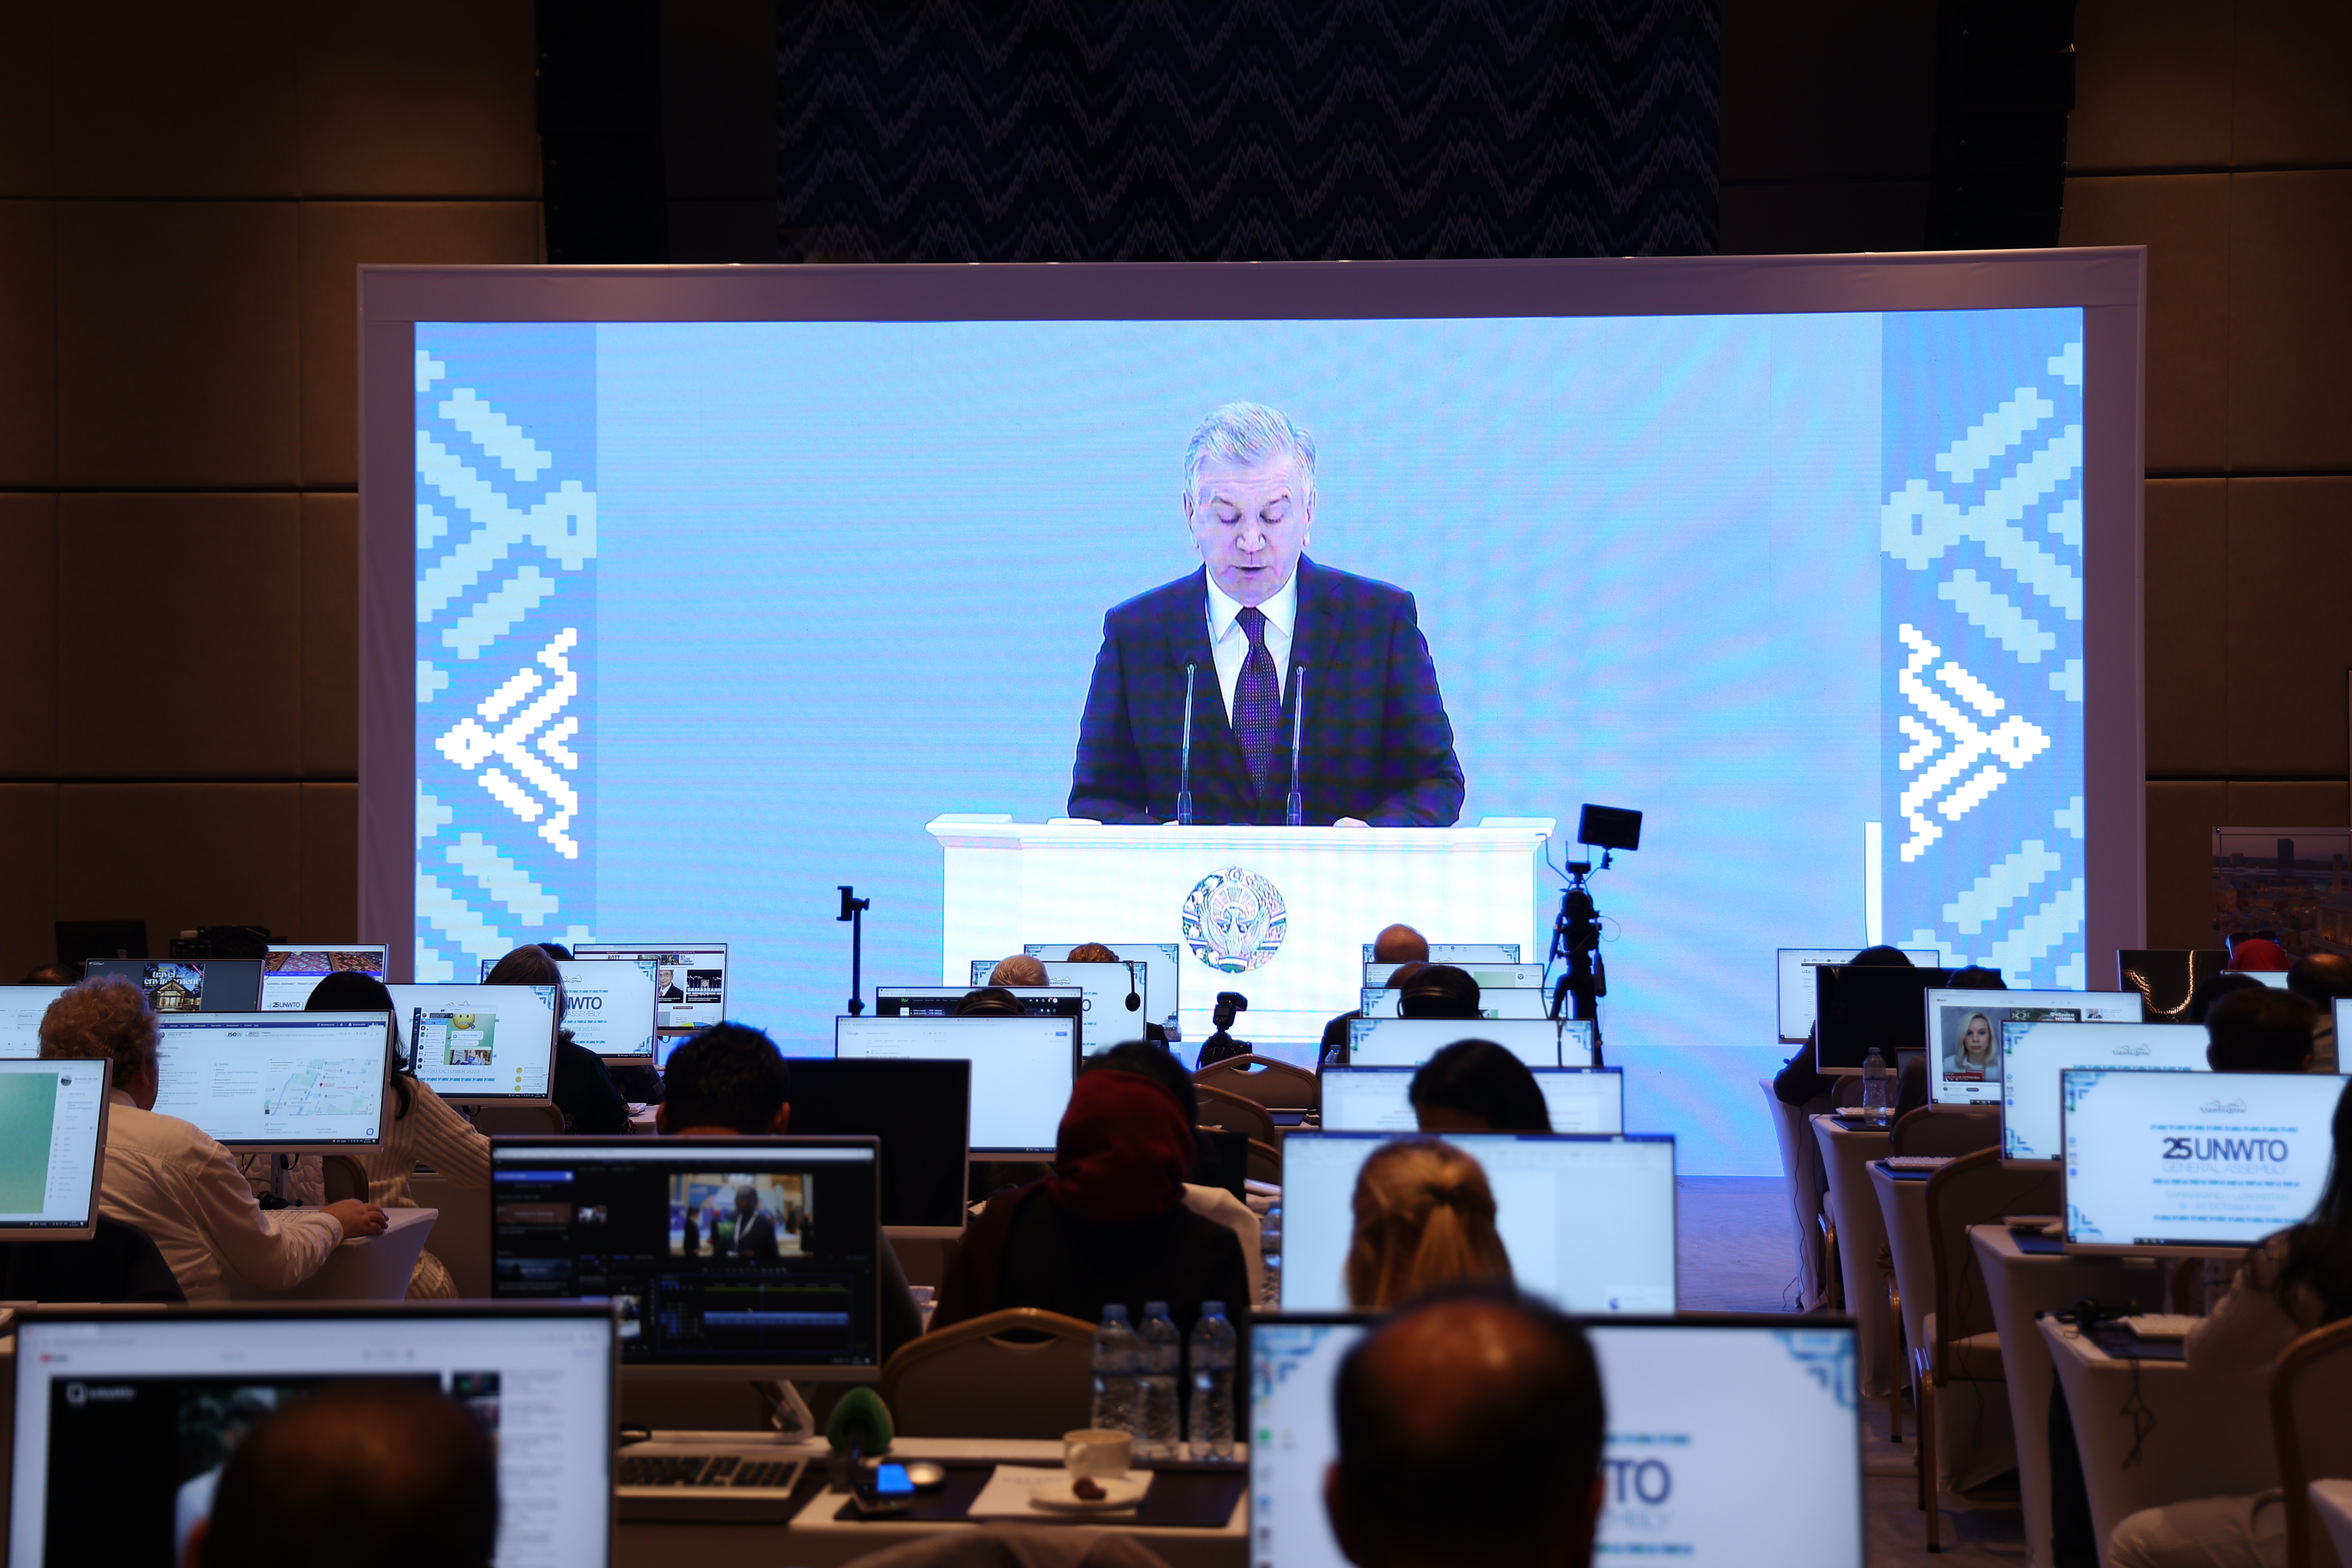 President Mirziyoyev unveils global tourism initiatives at 25th World Tourism Organization assembly in Samarkand 